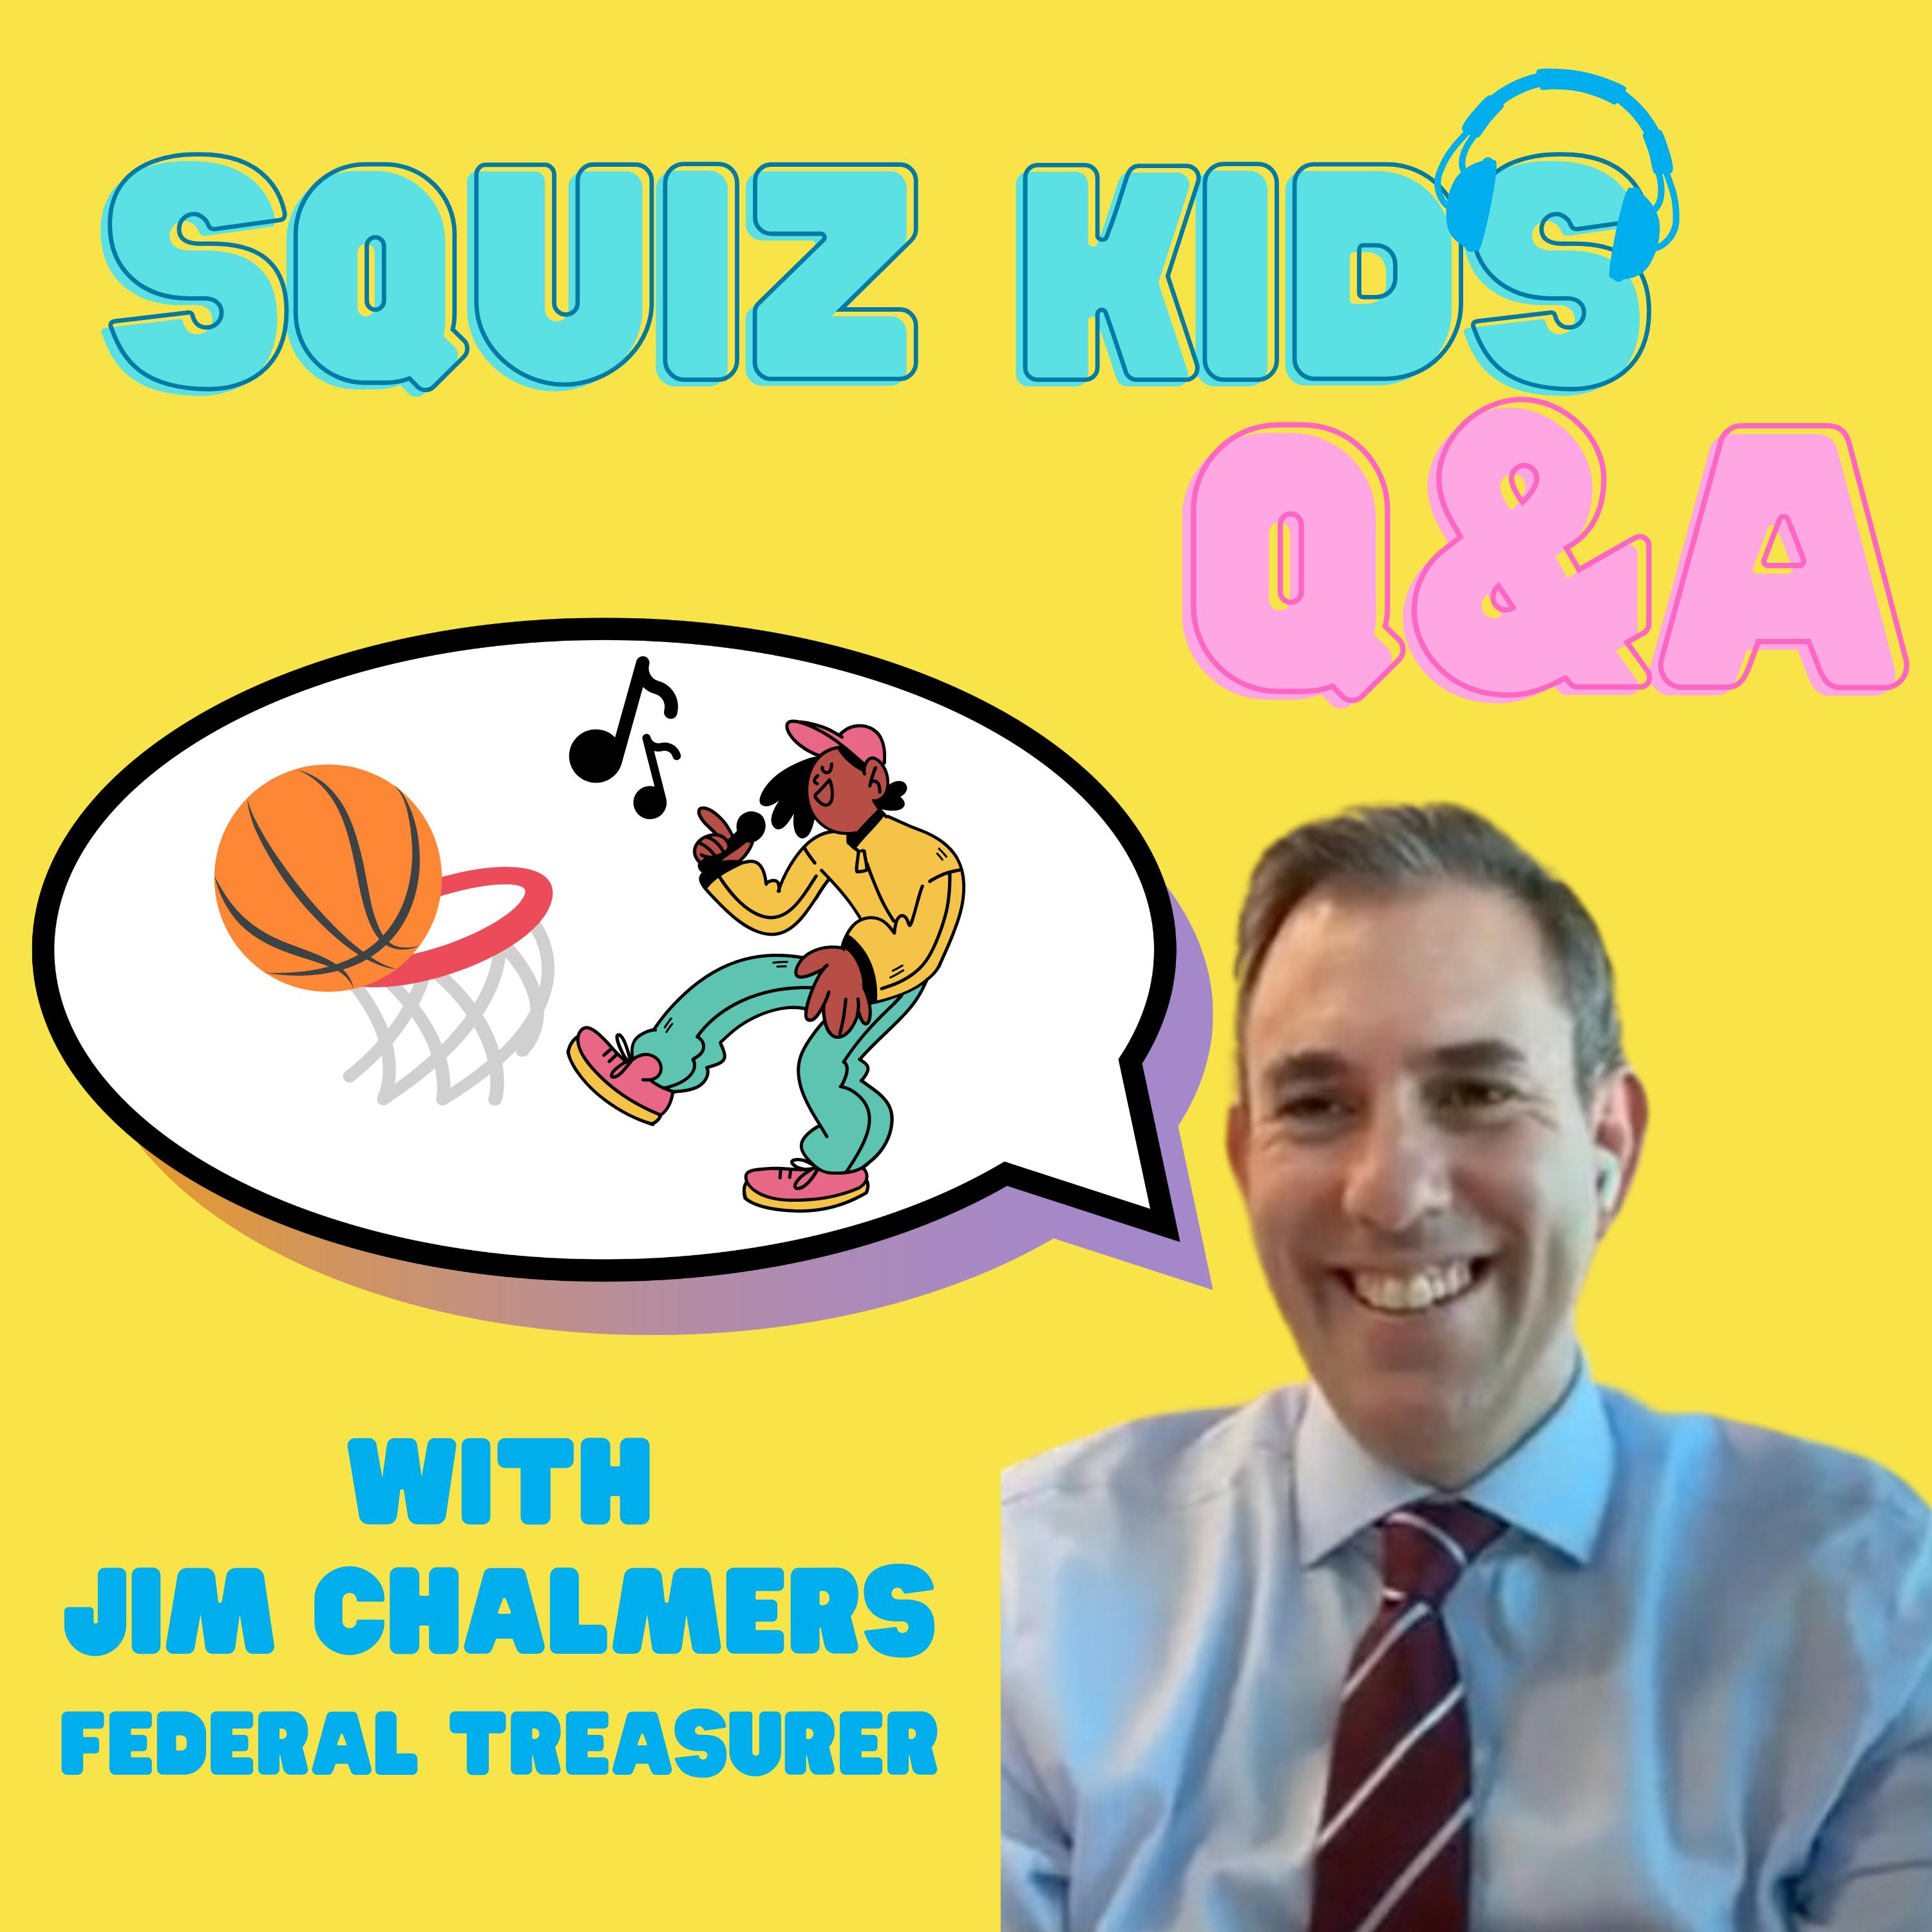 Jim Chalmers, Federal Treasurer - Squiz Kids Q+A